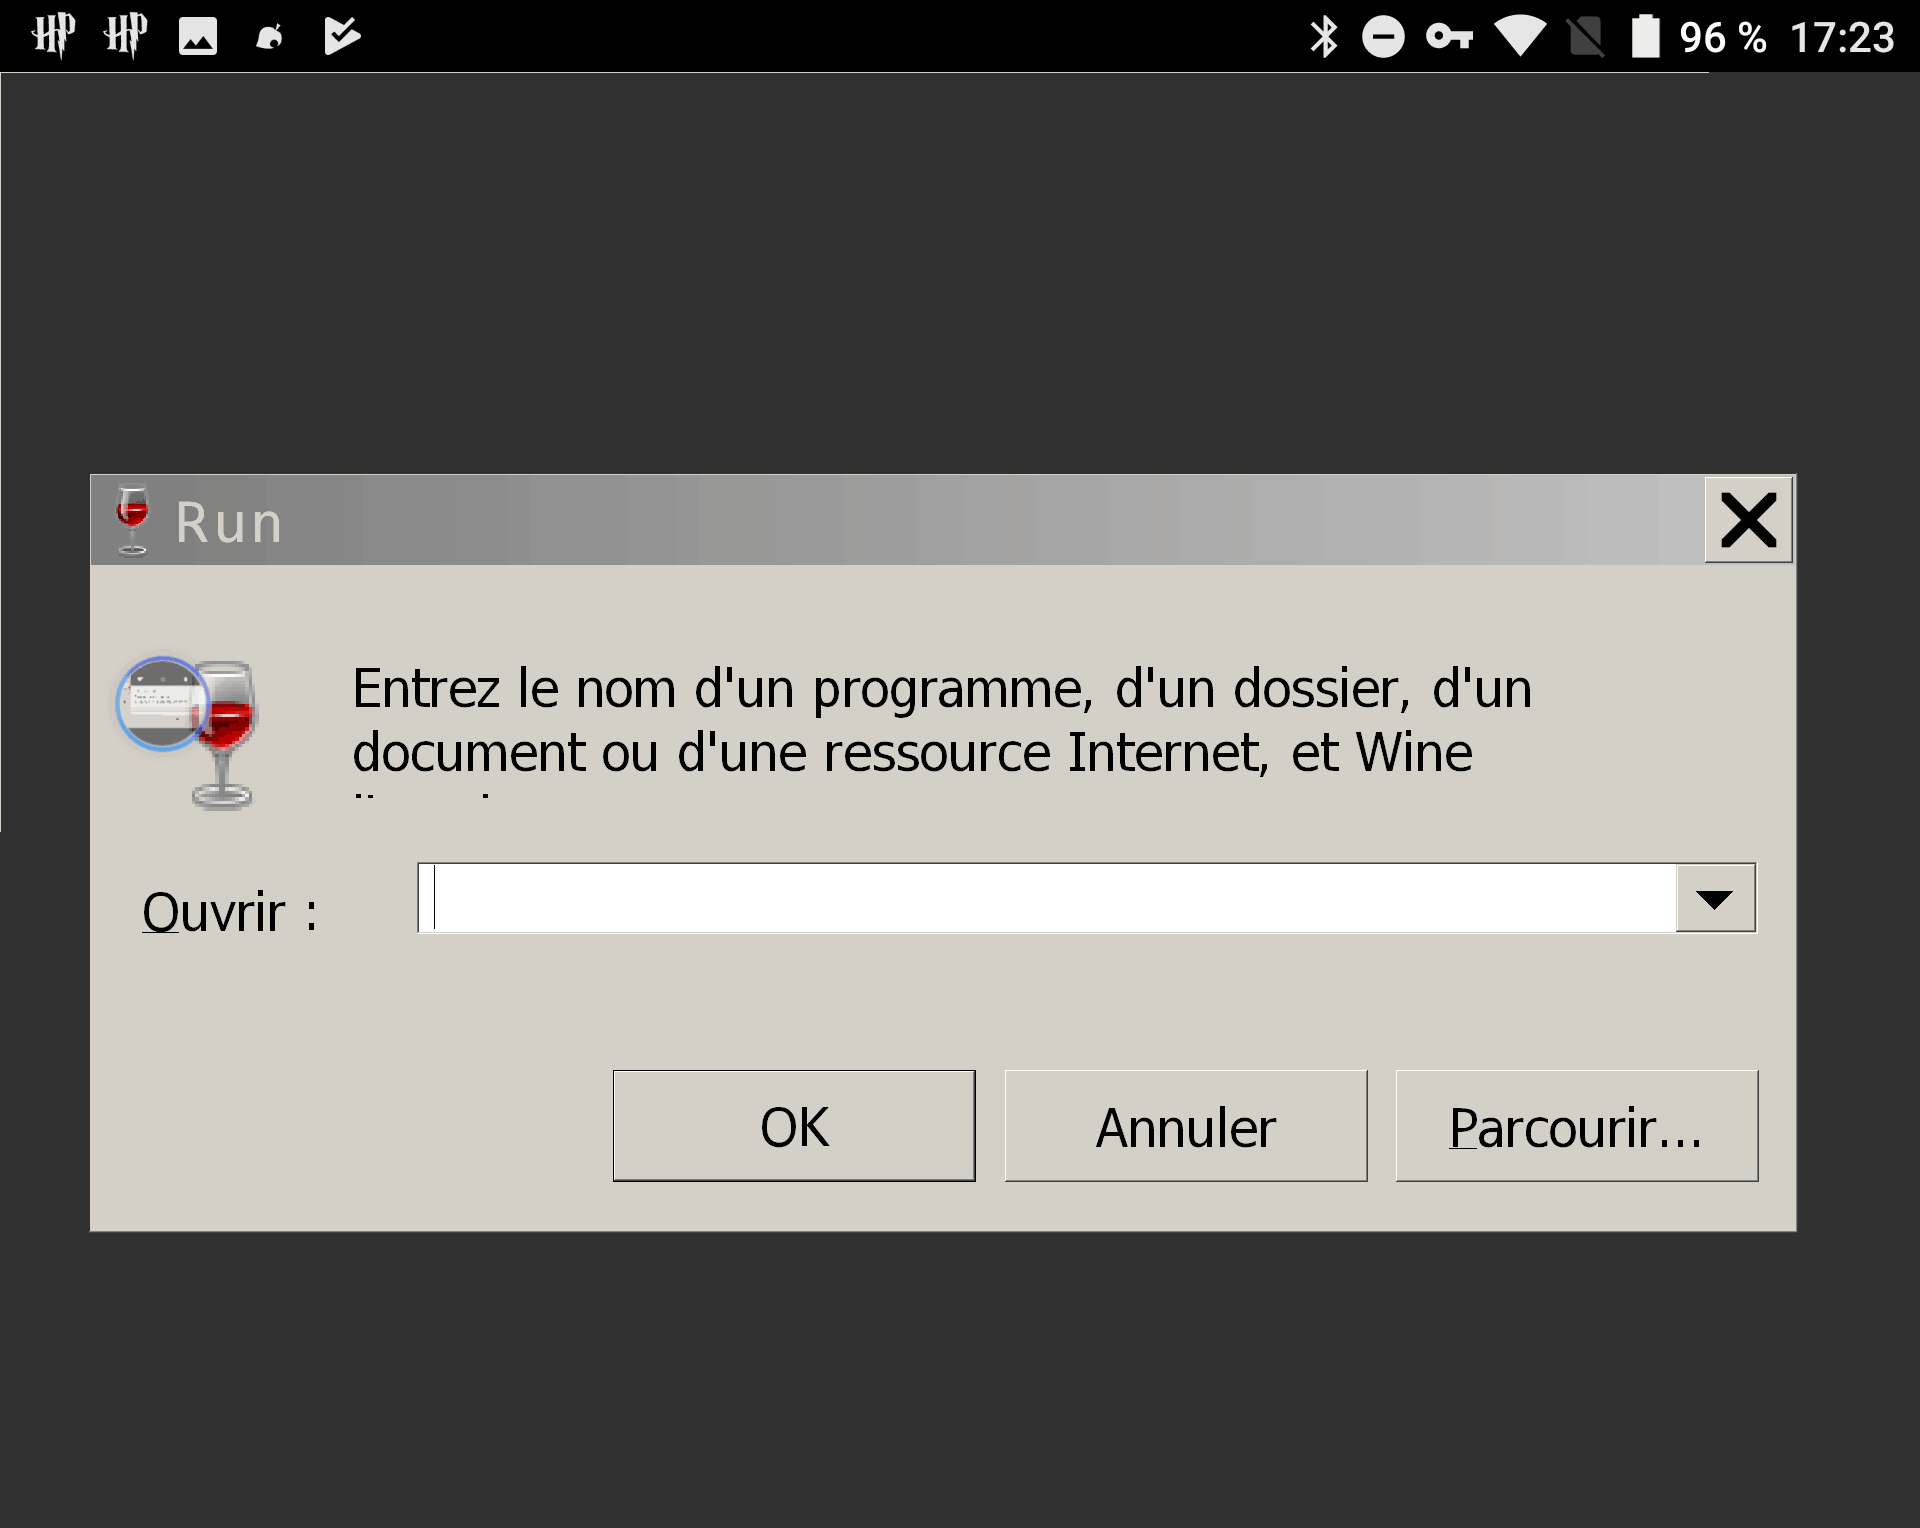 wine emulator mac and windows